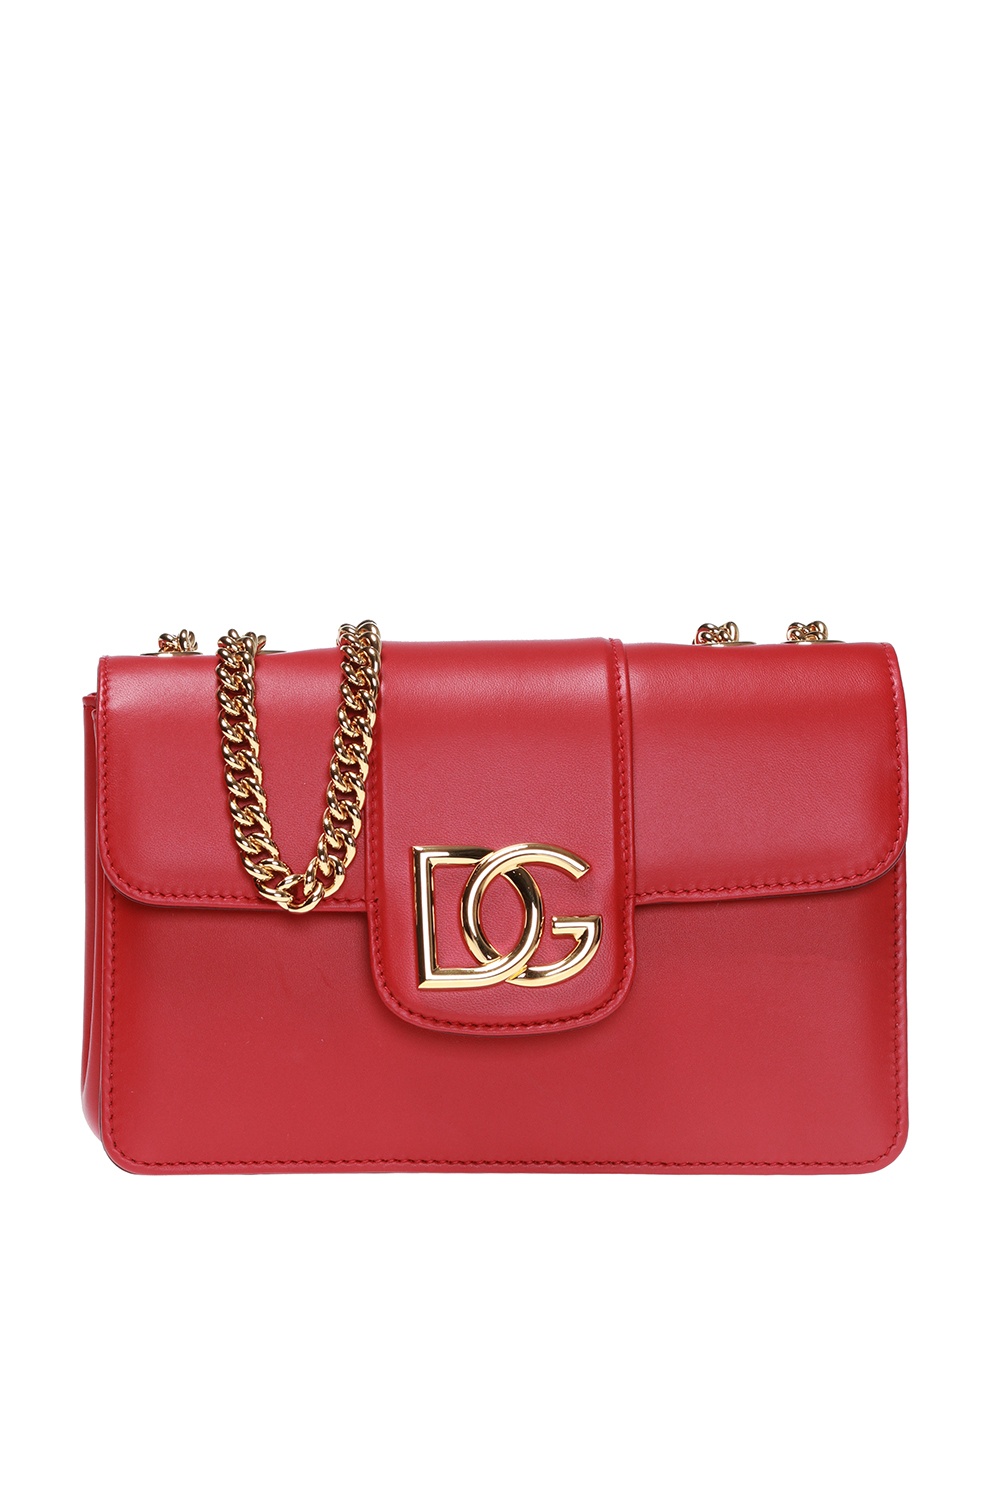 Red 'DG MILLENNIALS' shoulder bag Dolce & Gabbana - Vitkac Sweden